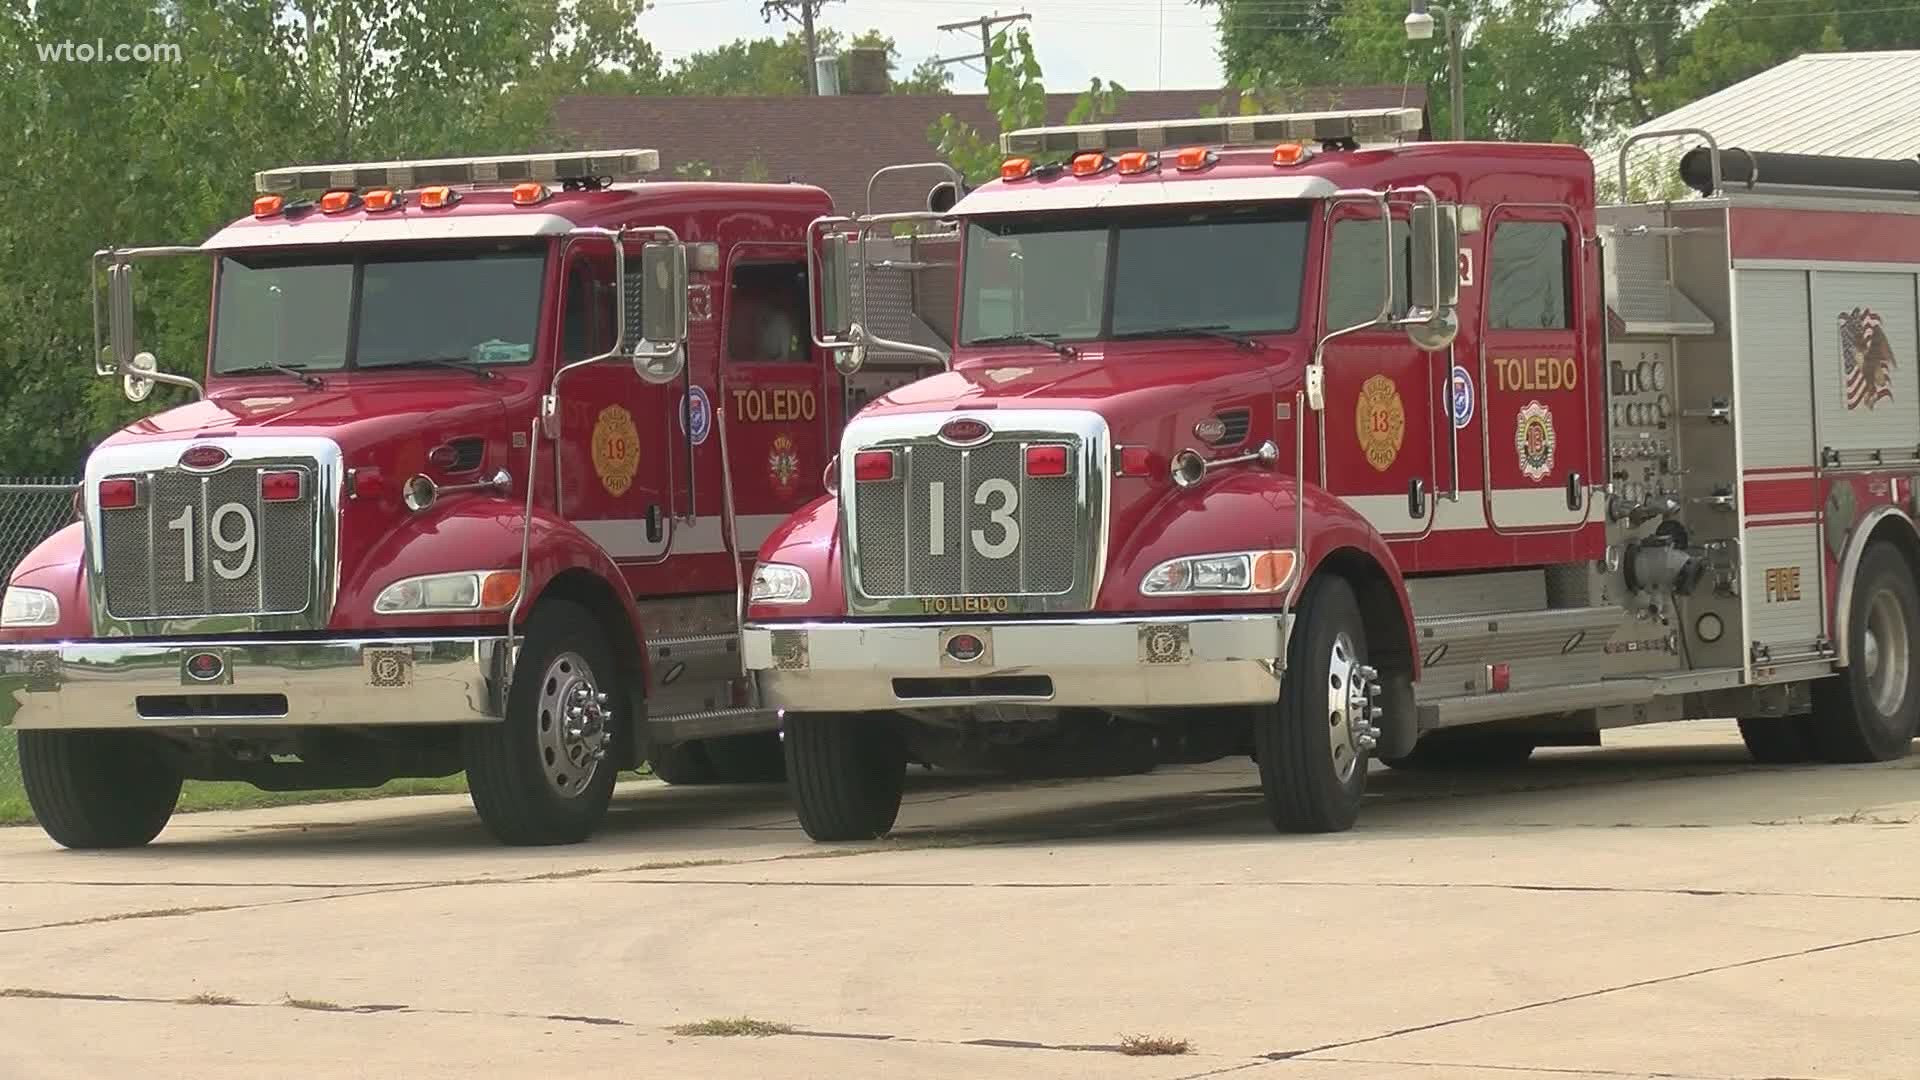 A Toledo firefighter, saving lives hundreds of miles away